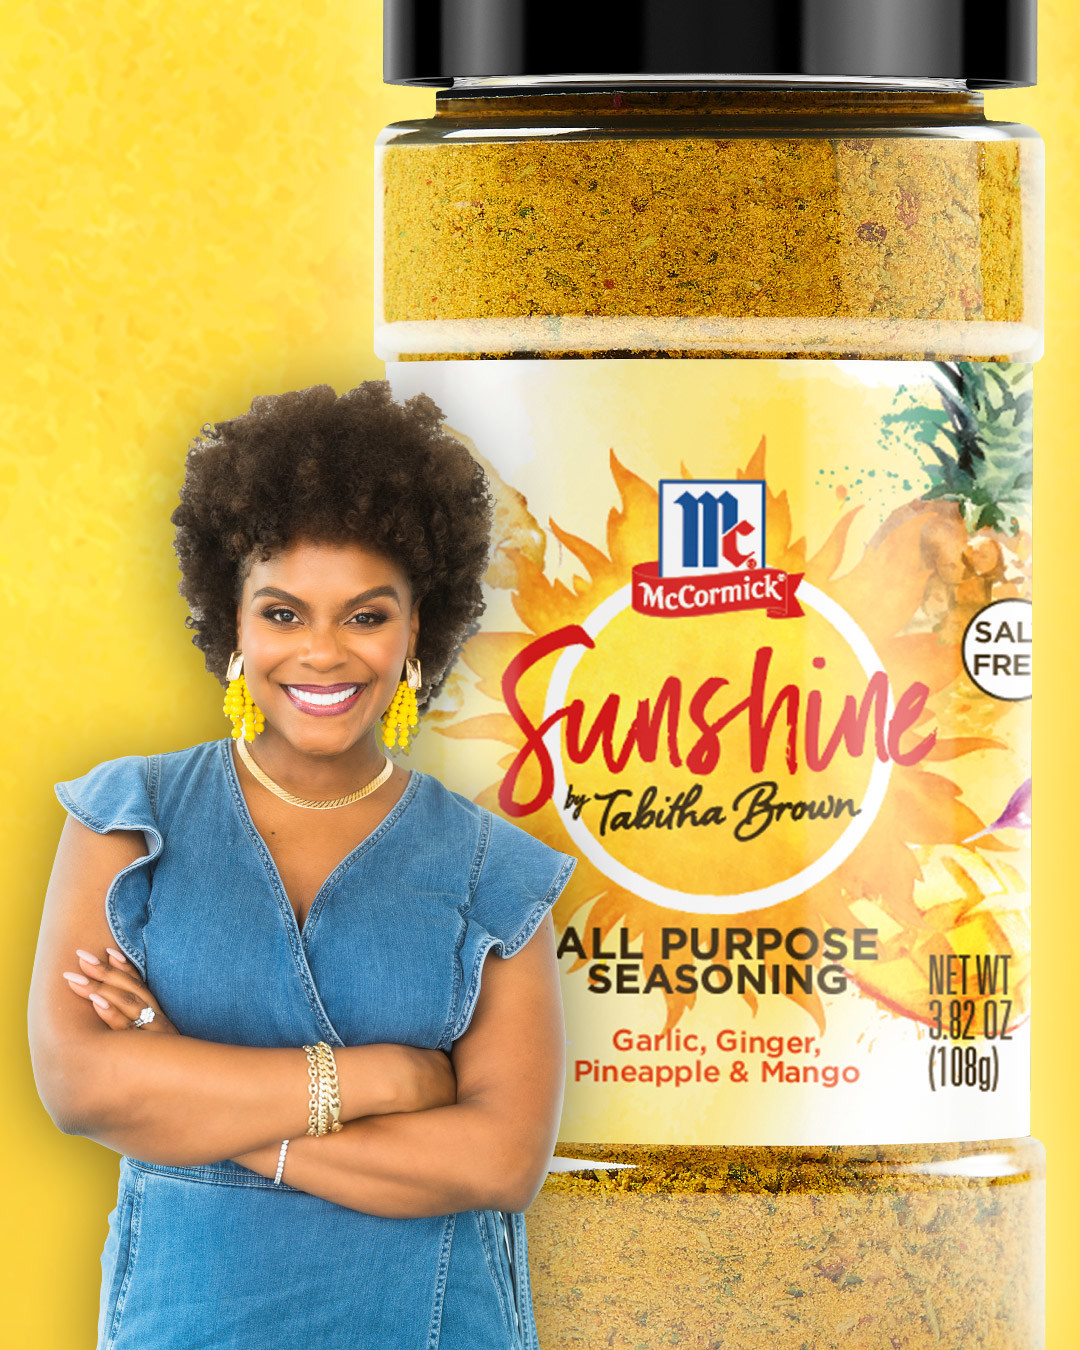 McCormick Sunshine by Tabitha Brown All Purpose Seasoning - Shop